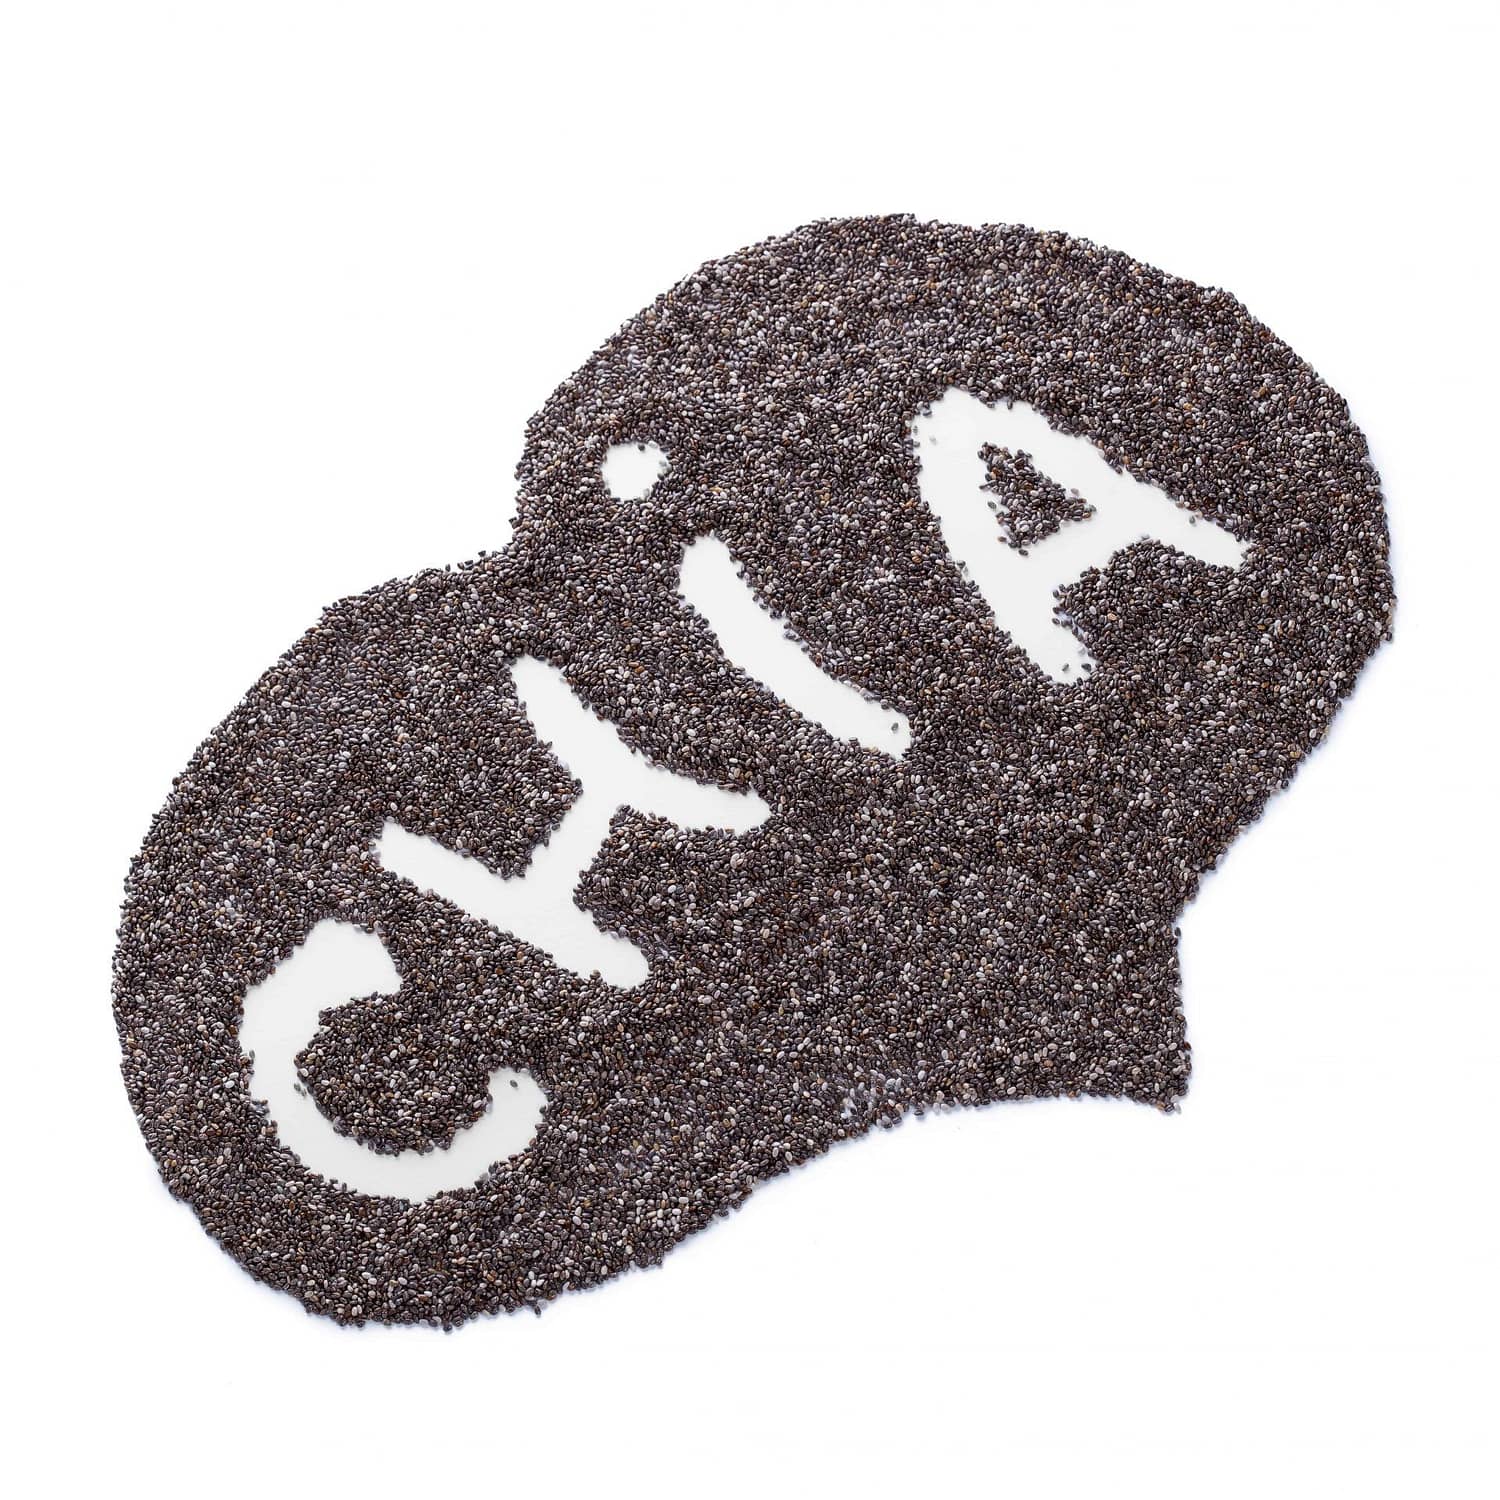 Chia seed health benefits